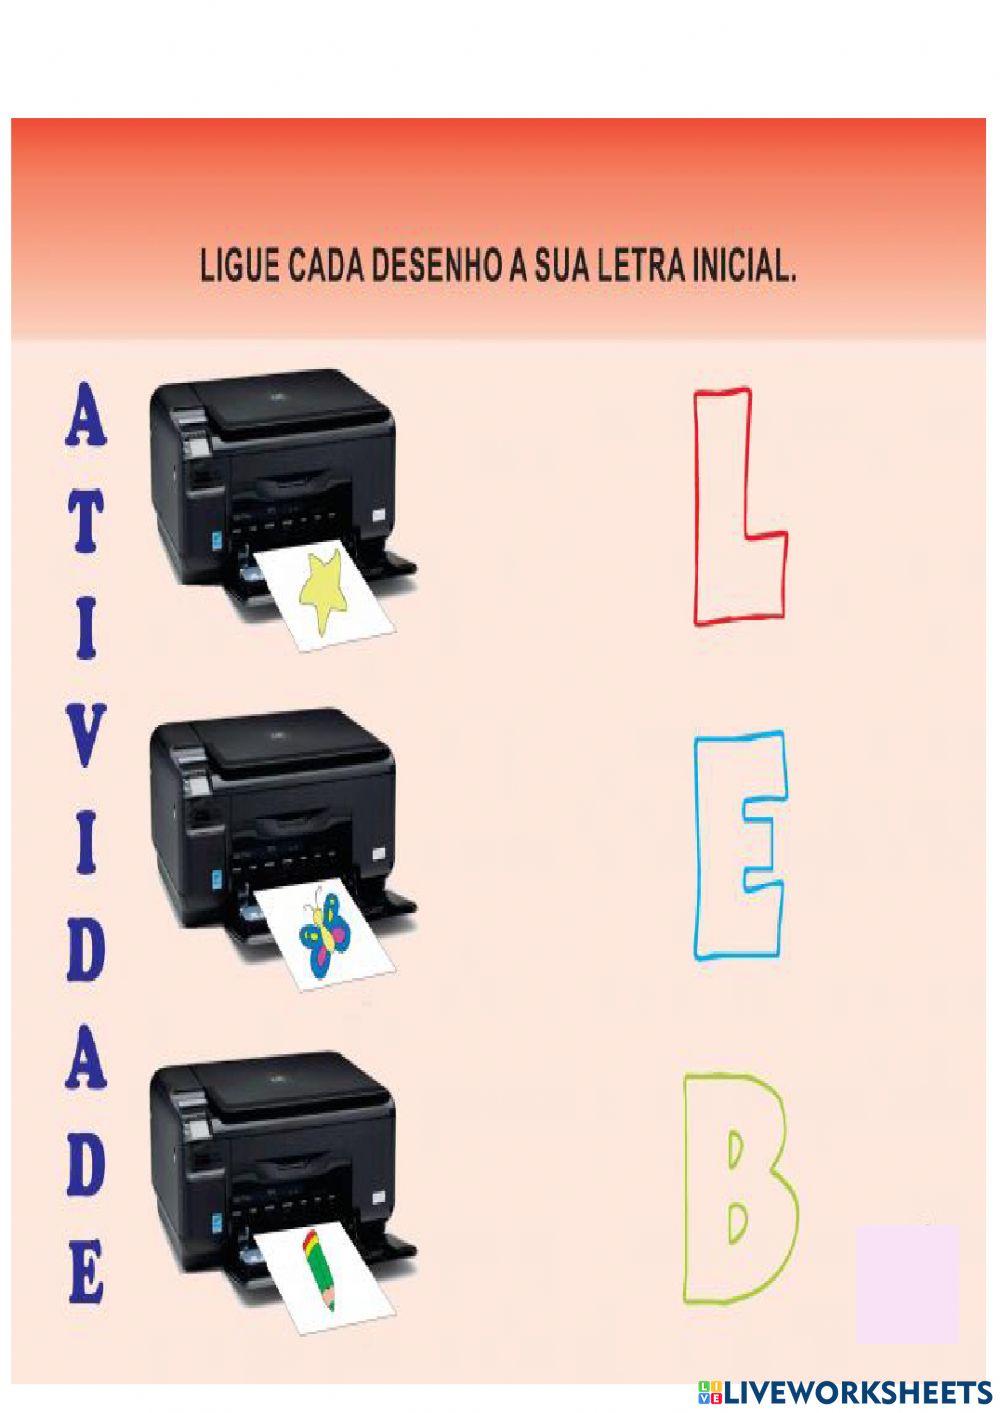 A impressora